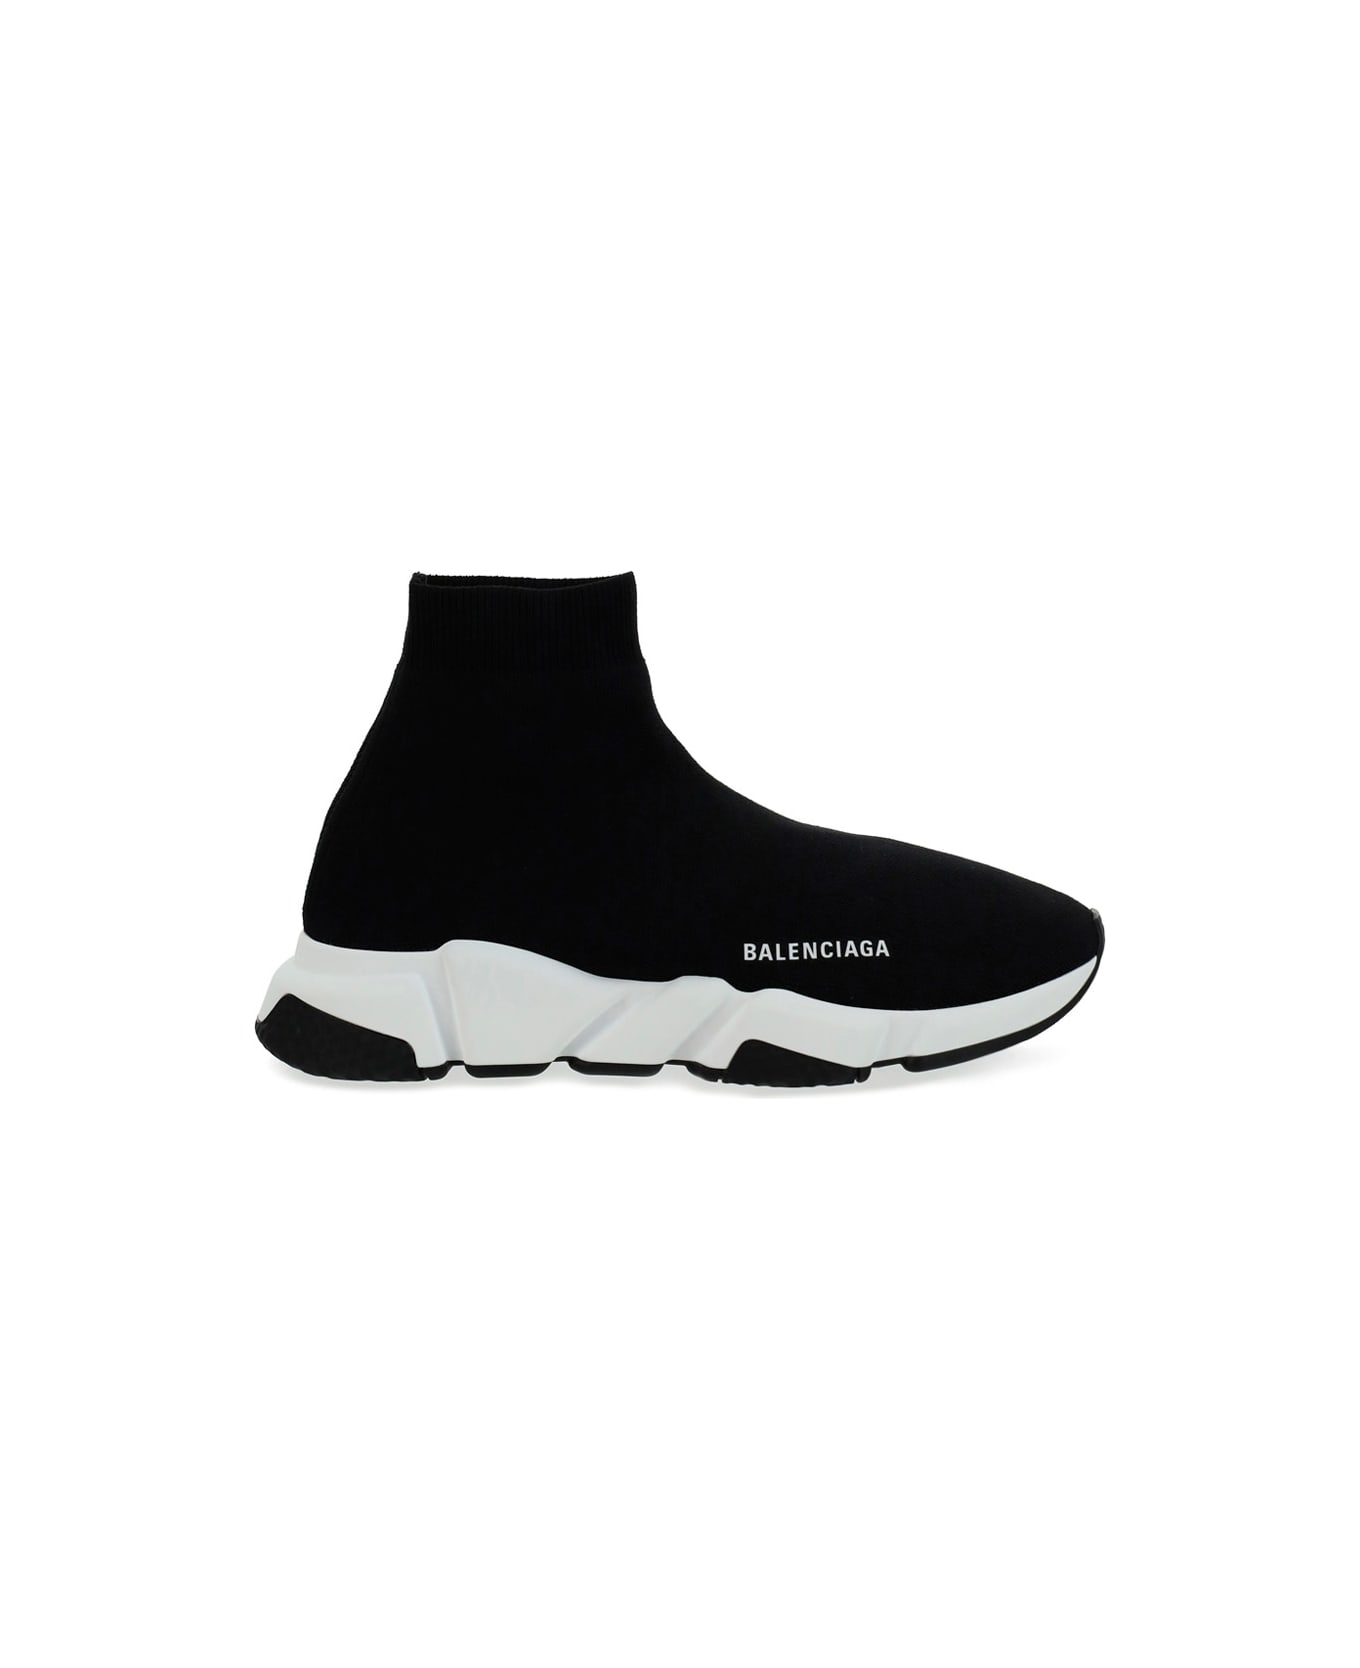 Balenciaga Speed Recycled Sneakers - Black/white/black